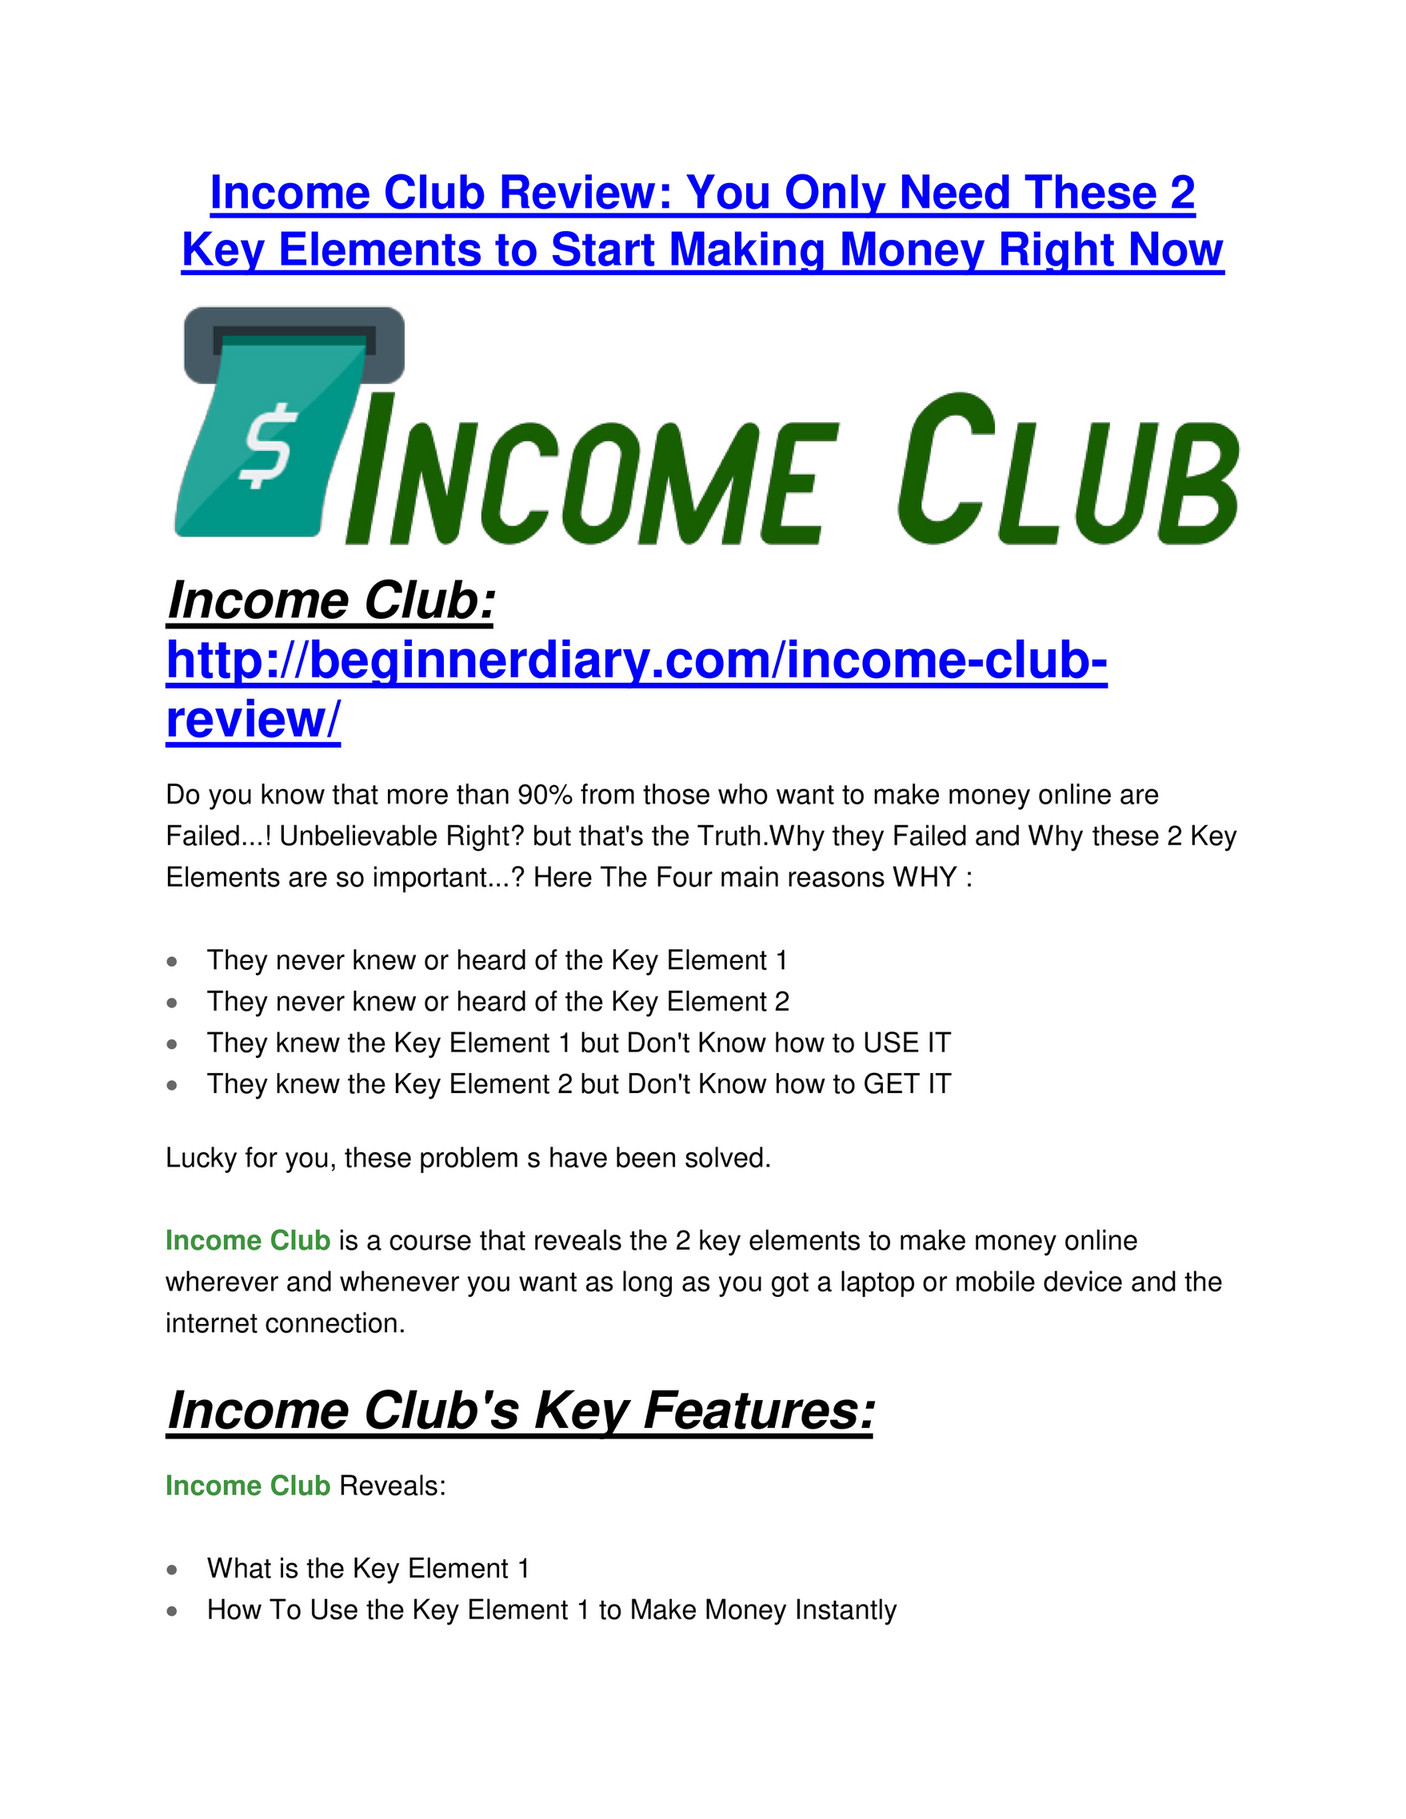 HHG Income Club Review Income Club MEGA 23 800 Bonuses Page 2 